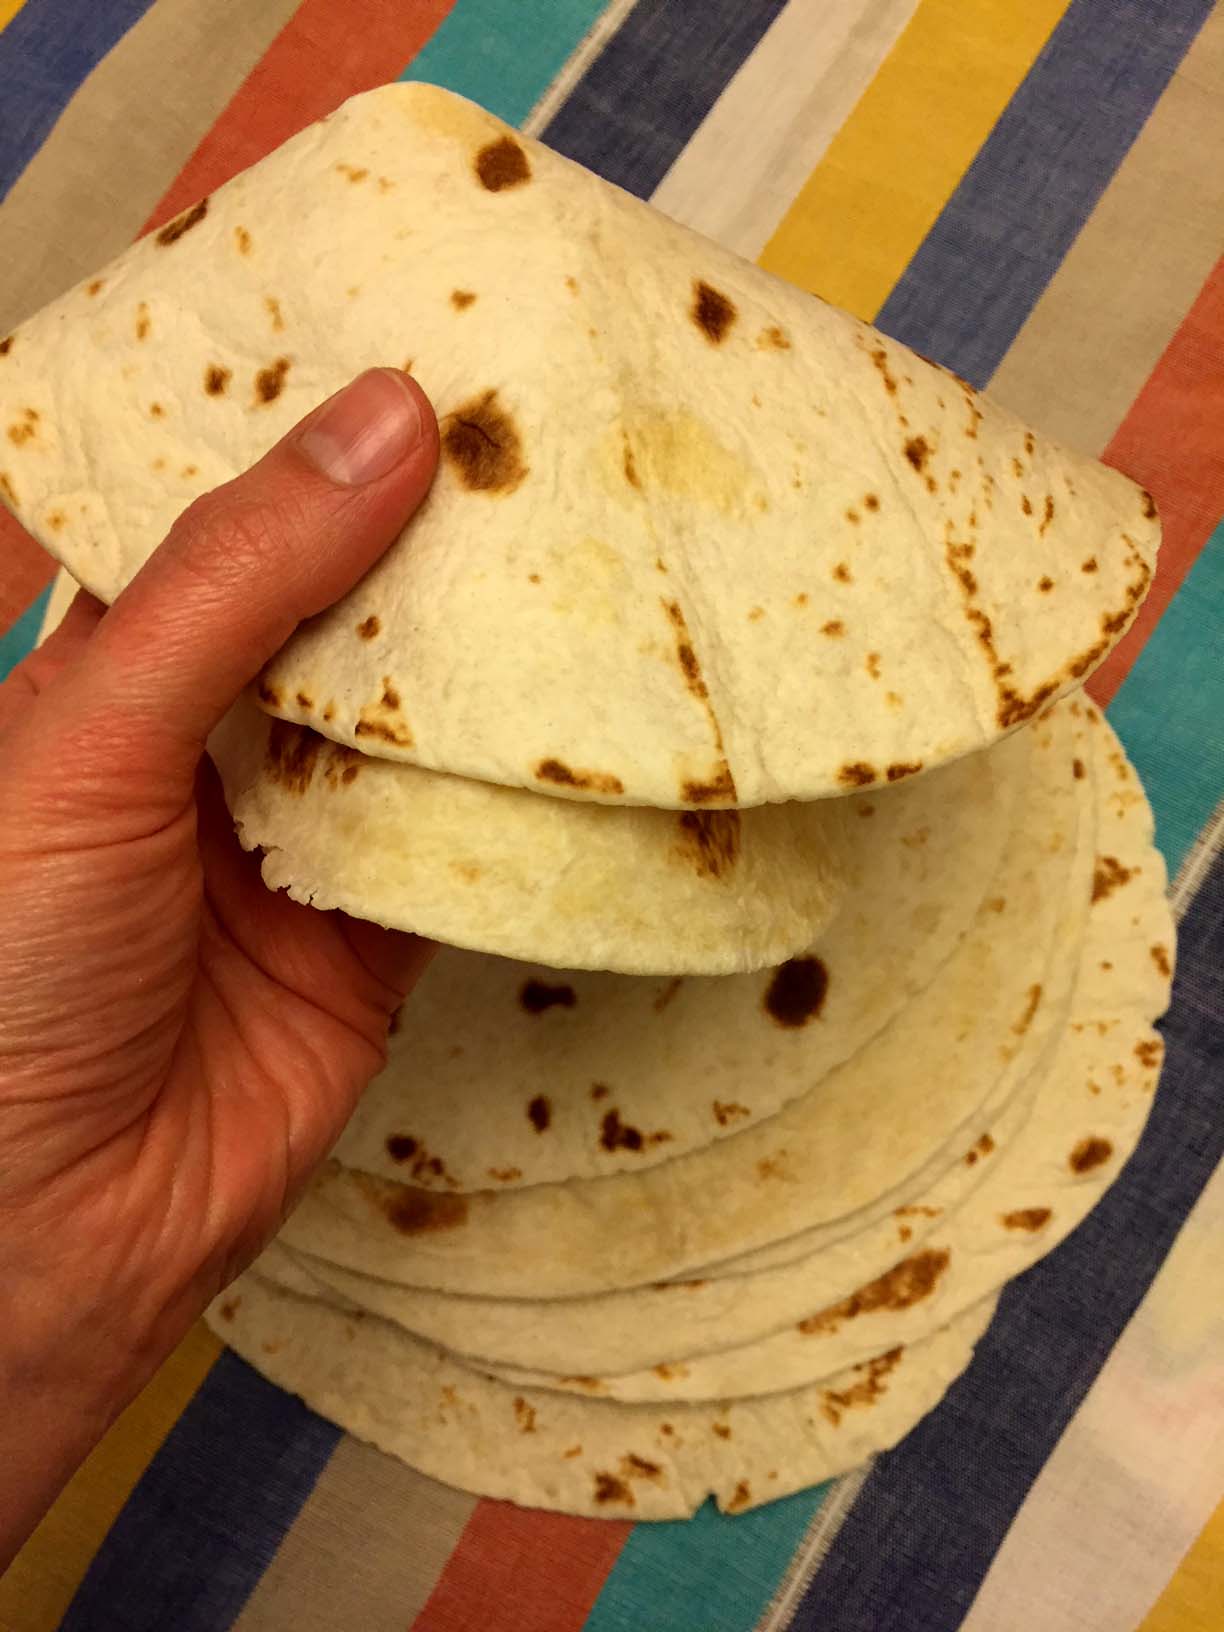 https://www.melaniecooks.com/wp-content/uploads/2017/11/tortillas_how_to_make.jpg